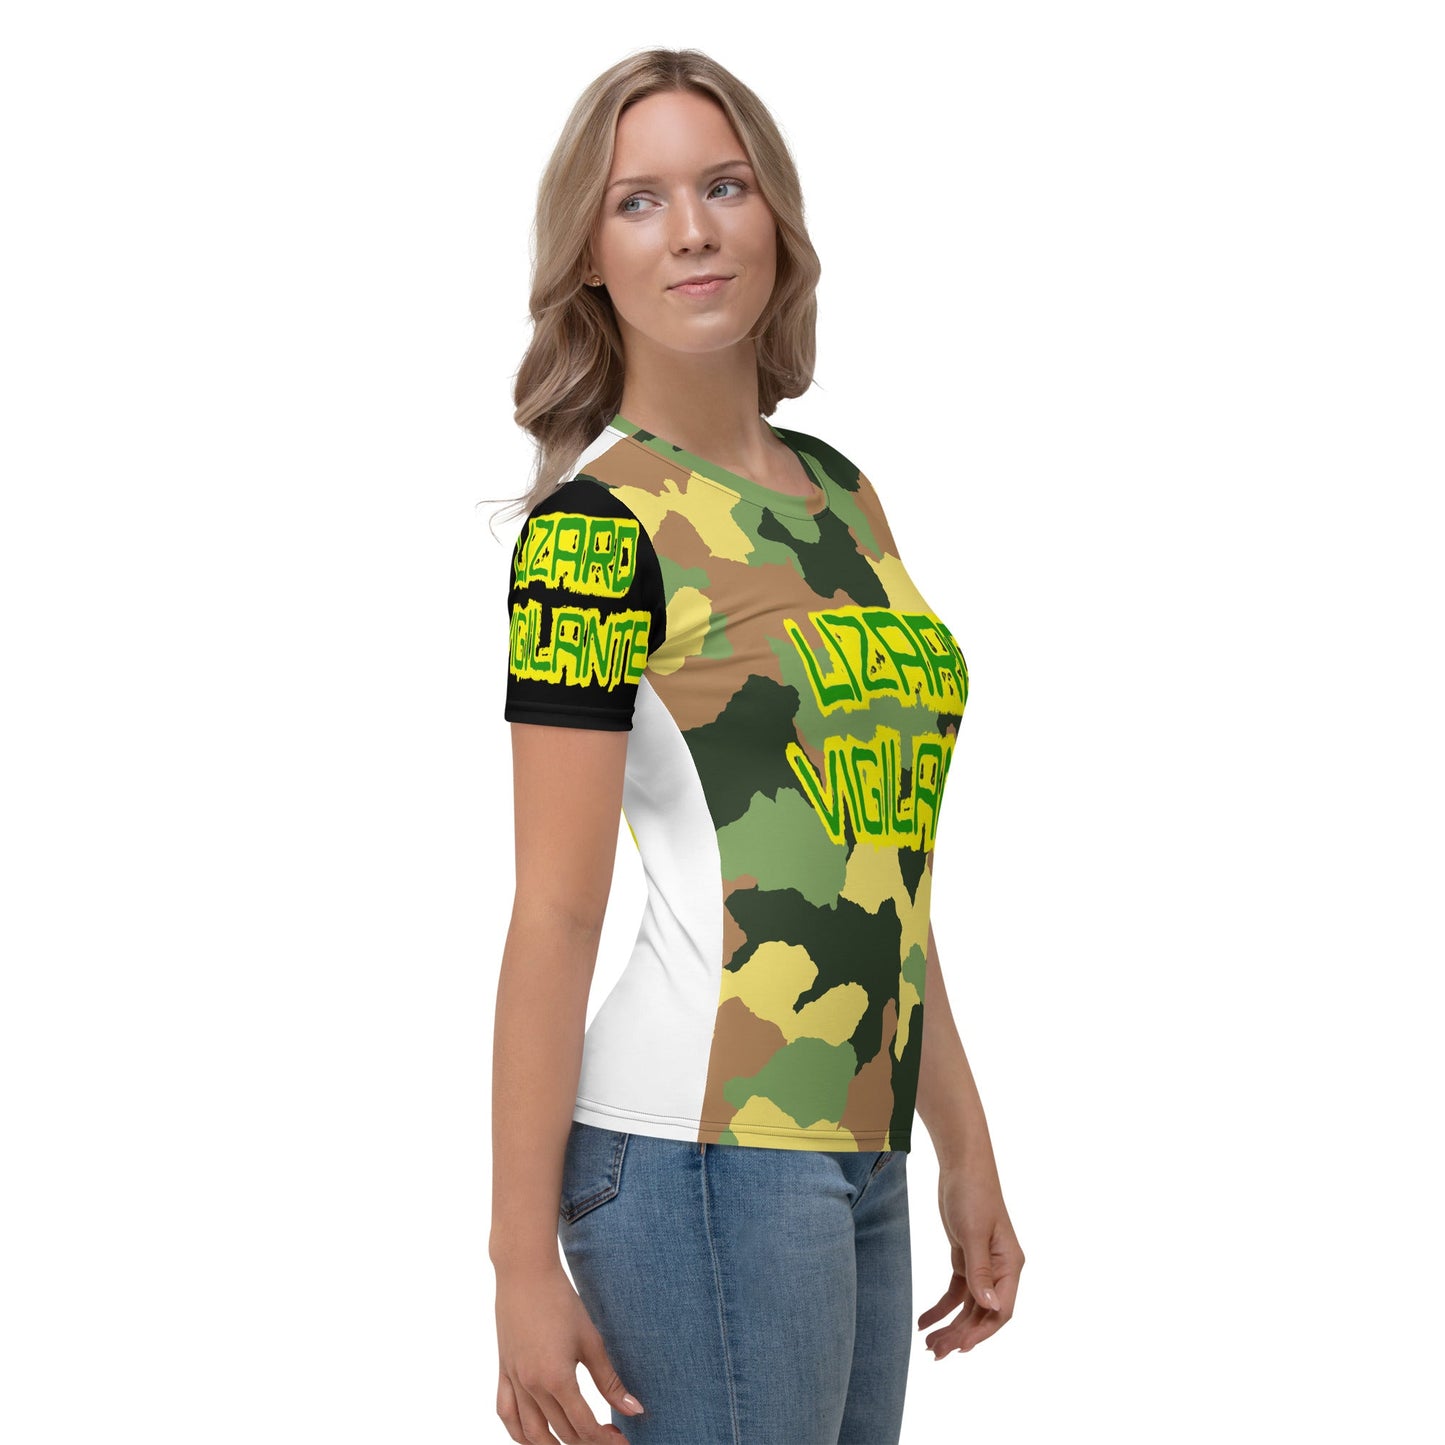 Lizard Vigilante Logoo Camo Women's T-shirt - Lizard Vigilante